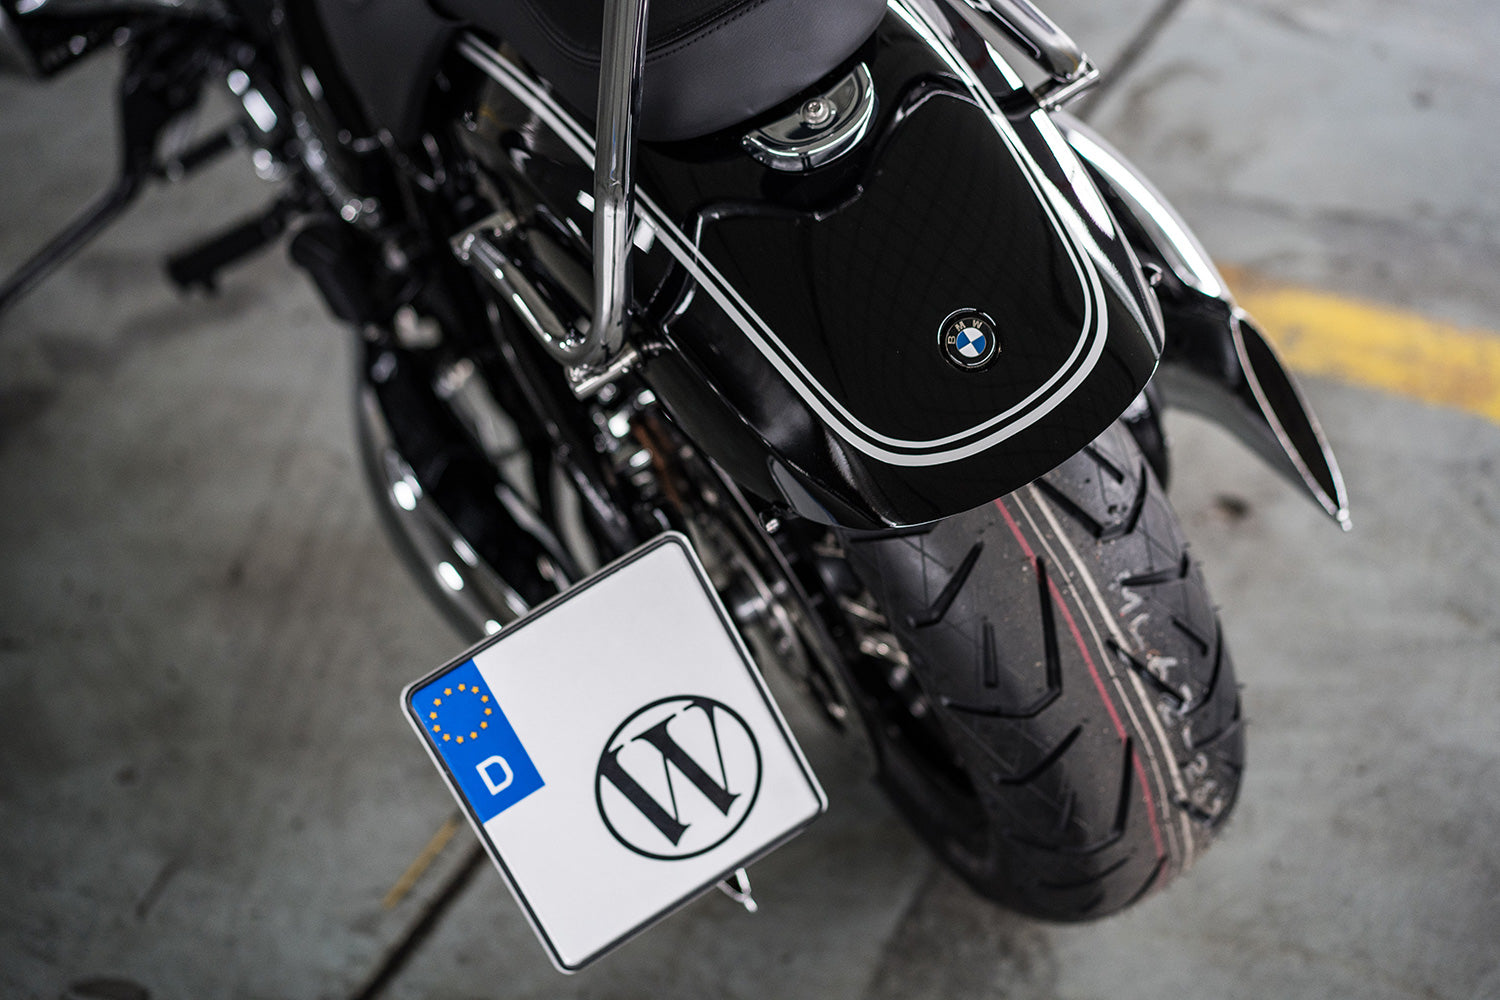 Motorcycle Side License Plate Holder Bracket with LED Light for